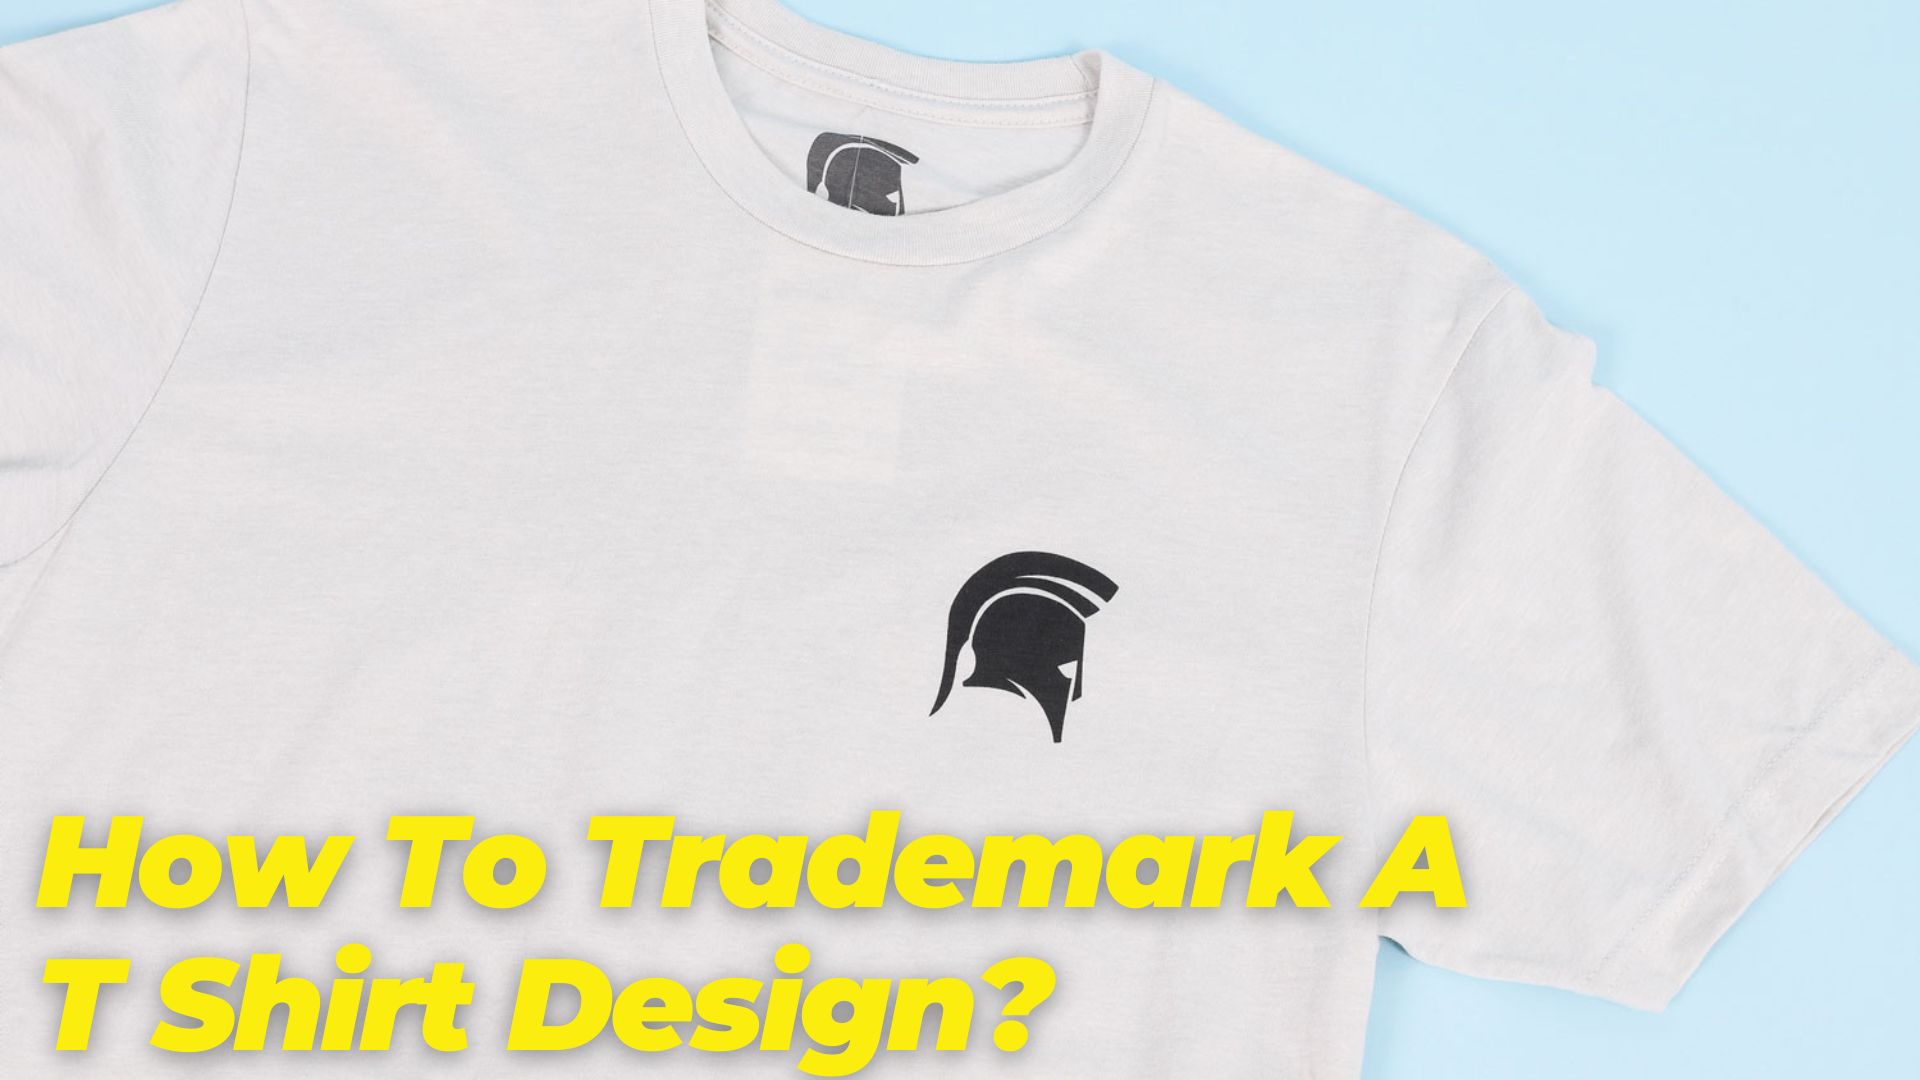 How To Trademark A T Shirt Design